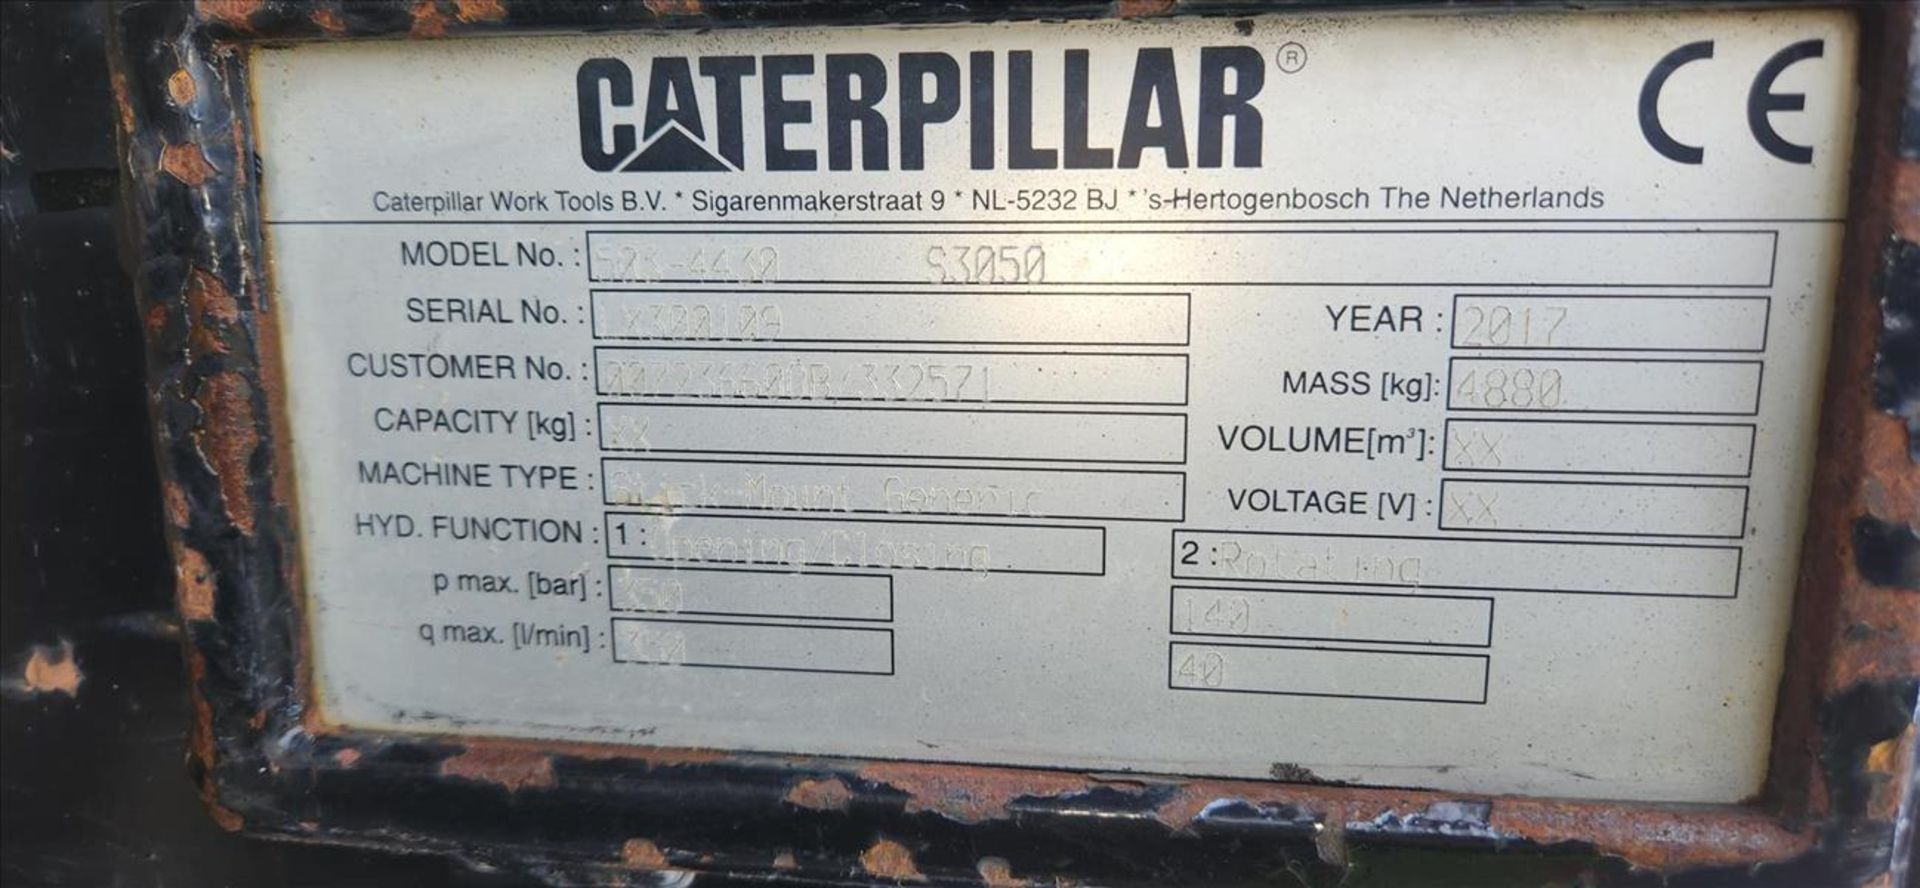 Caterpillar S3050 hydraulic shear attachment, mod. 503-4430 S3050, ser. no. 1X300109 (2017) (Asset - Image 4 of 4